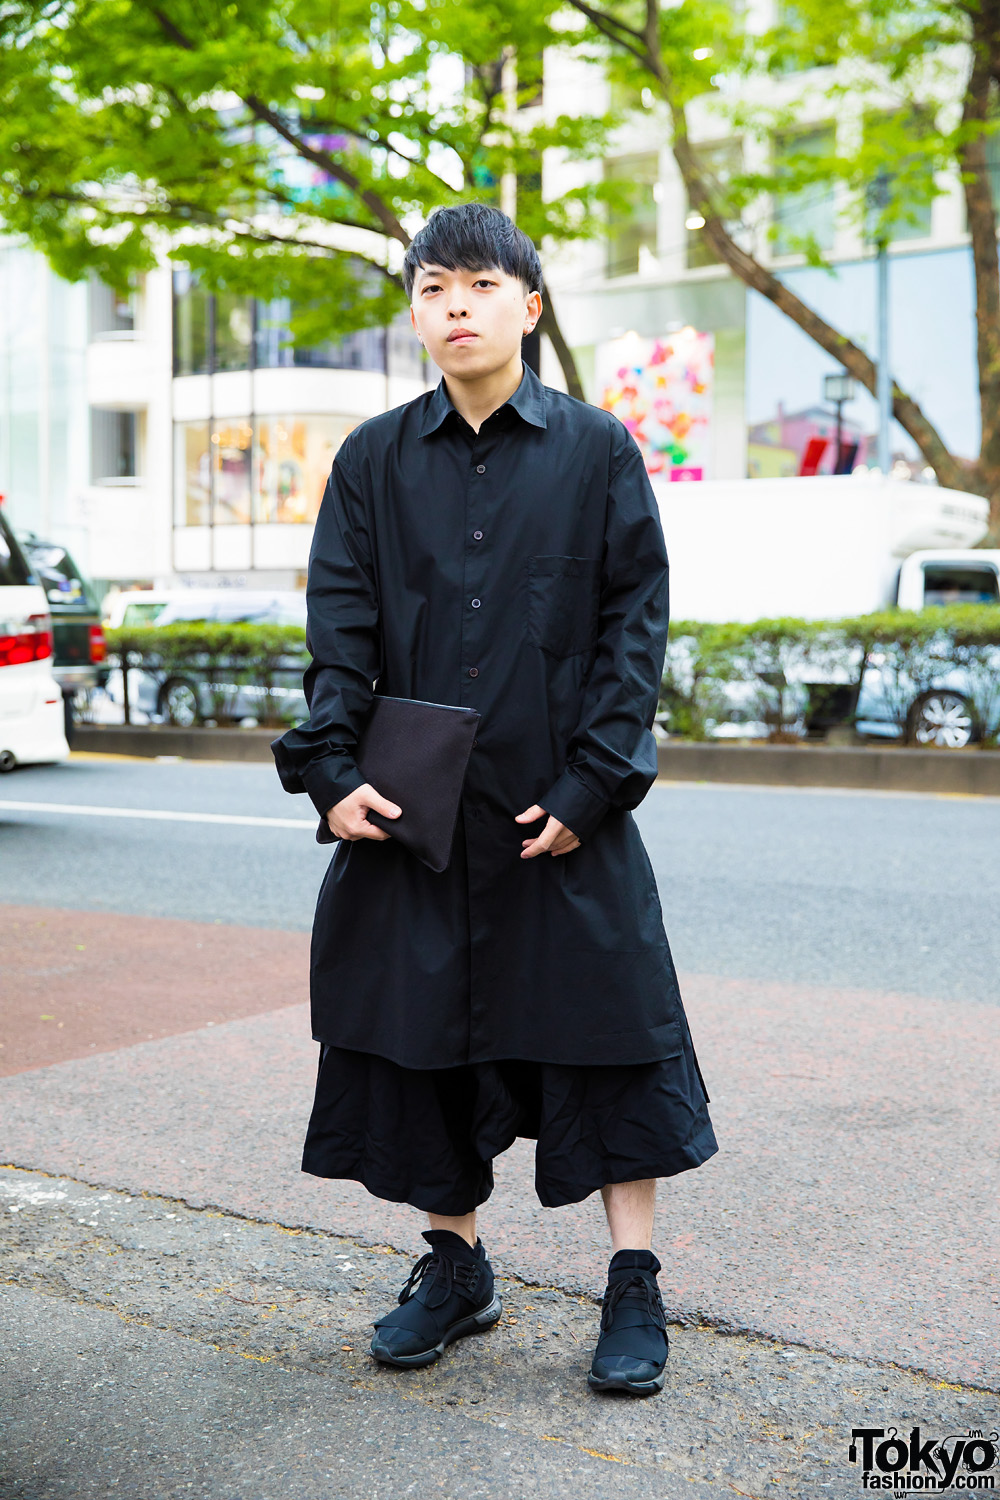 Harajuku Guy in Cote Mer Graphic Streetwear Style w/ Black